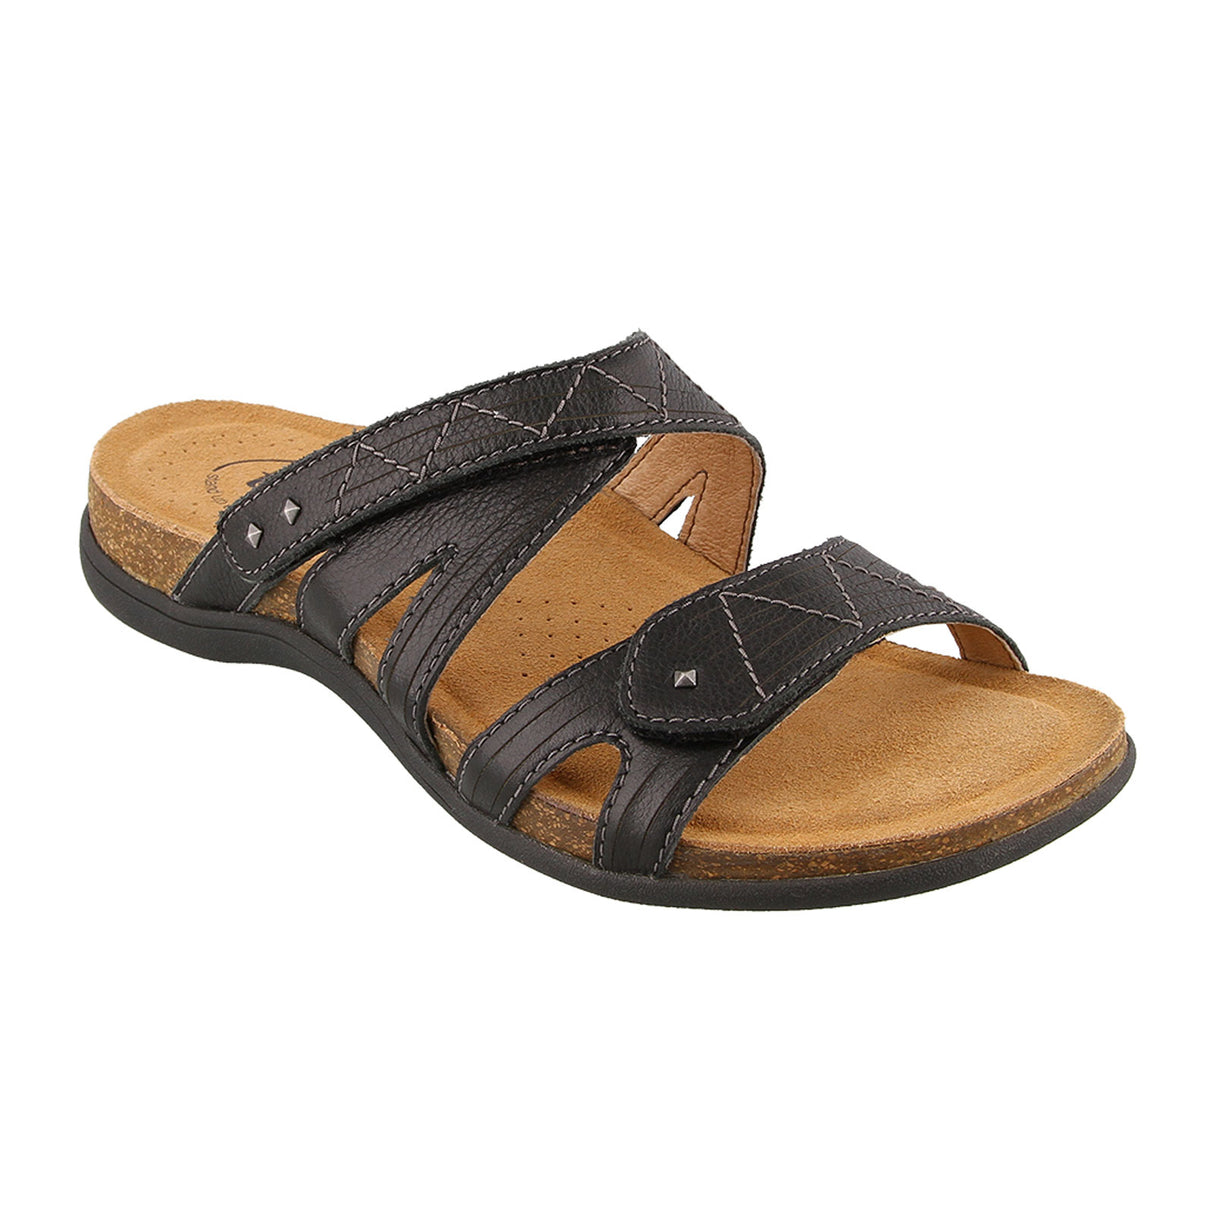 Taos Premier Slide Sandal (Women) - Black Sandals - Slide - The Heel Shoe Fitters